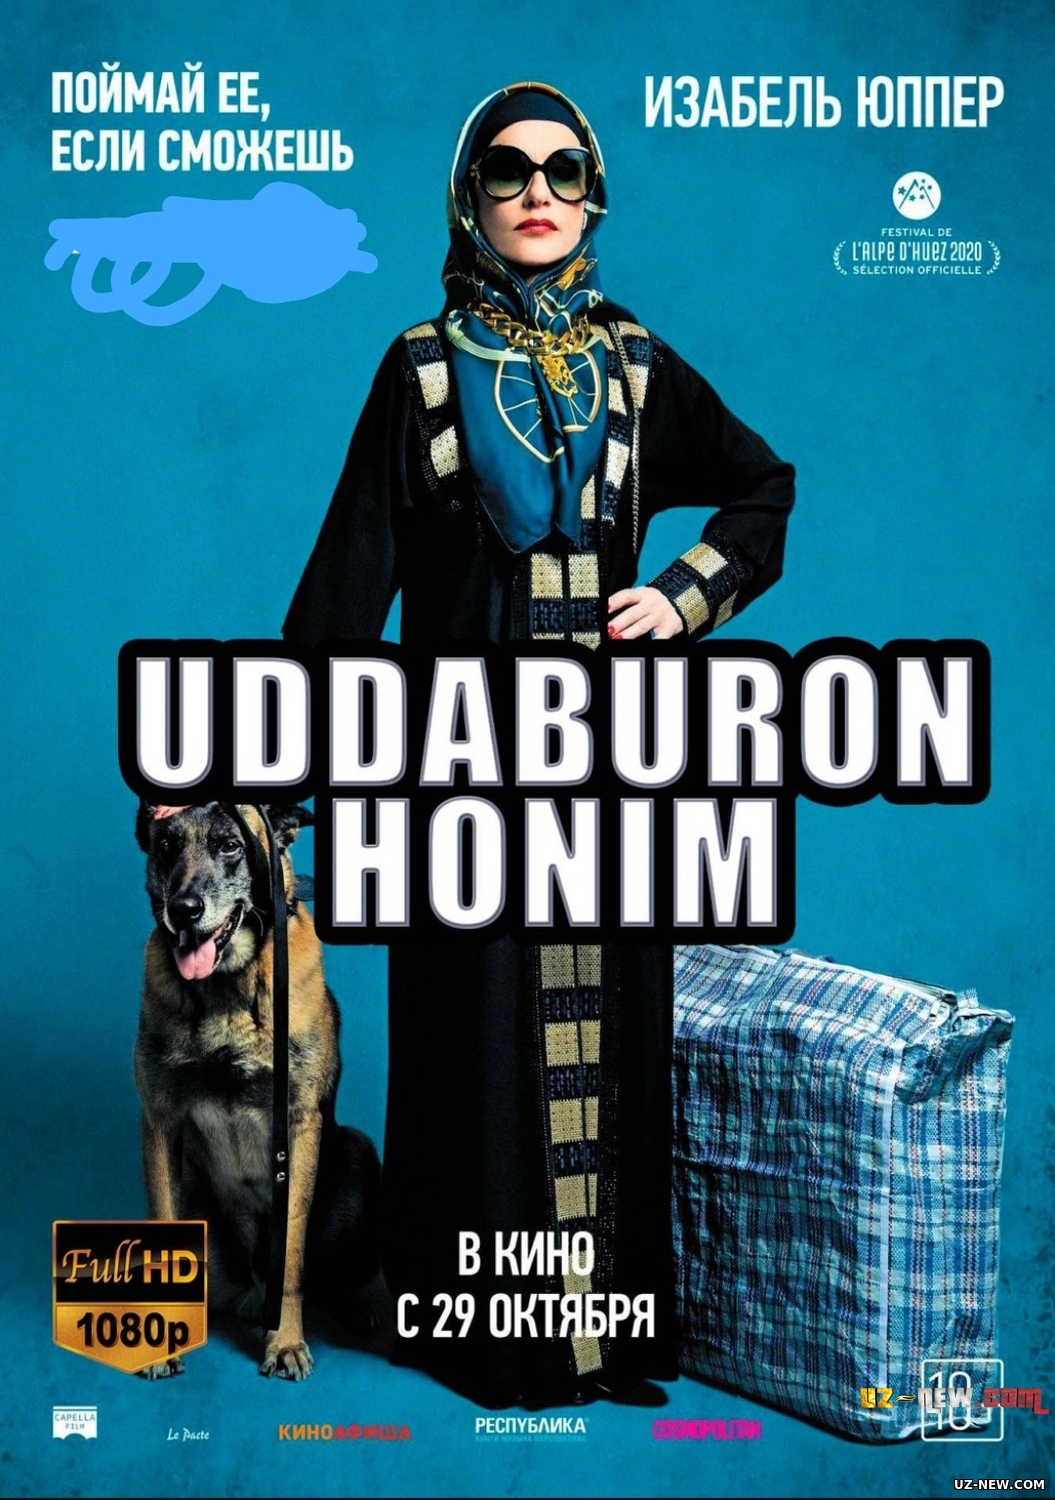 Uddaburon honim / Cho'qintirgan ona (Uzbek tilida O'zbekcha) 2020